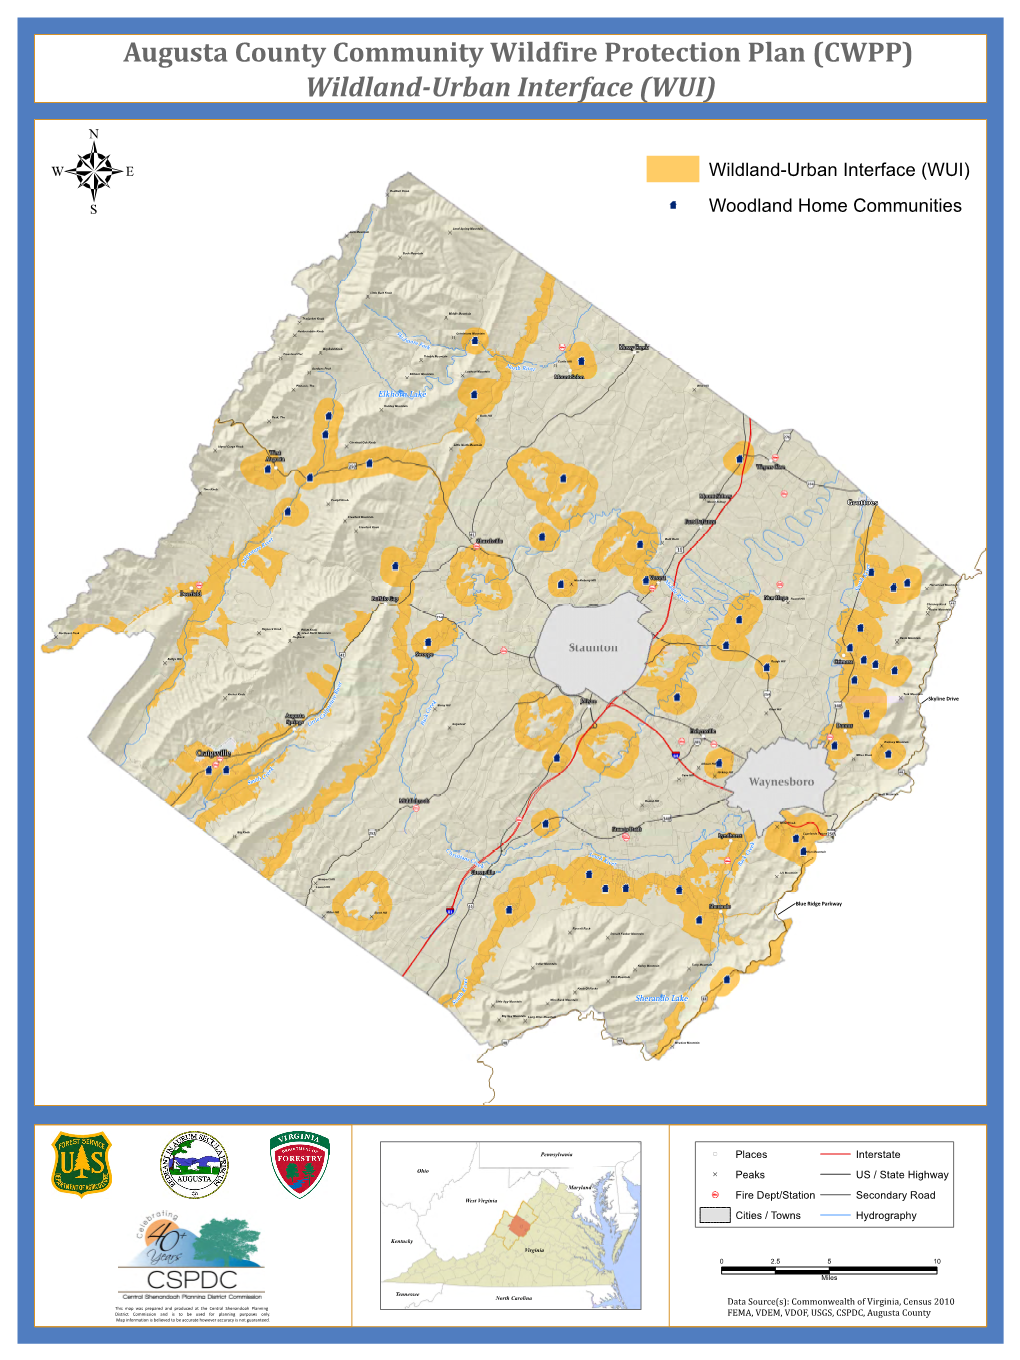 Augusta County Community Wildfire Protection Plan (CWPP) Wildland-Urban Interface (WUI)